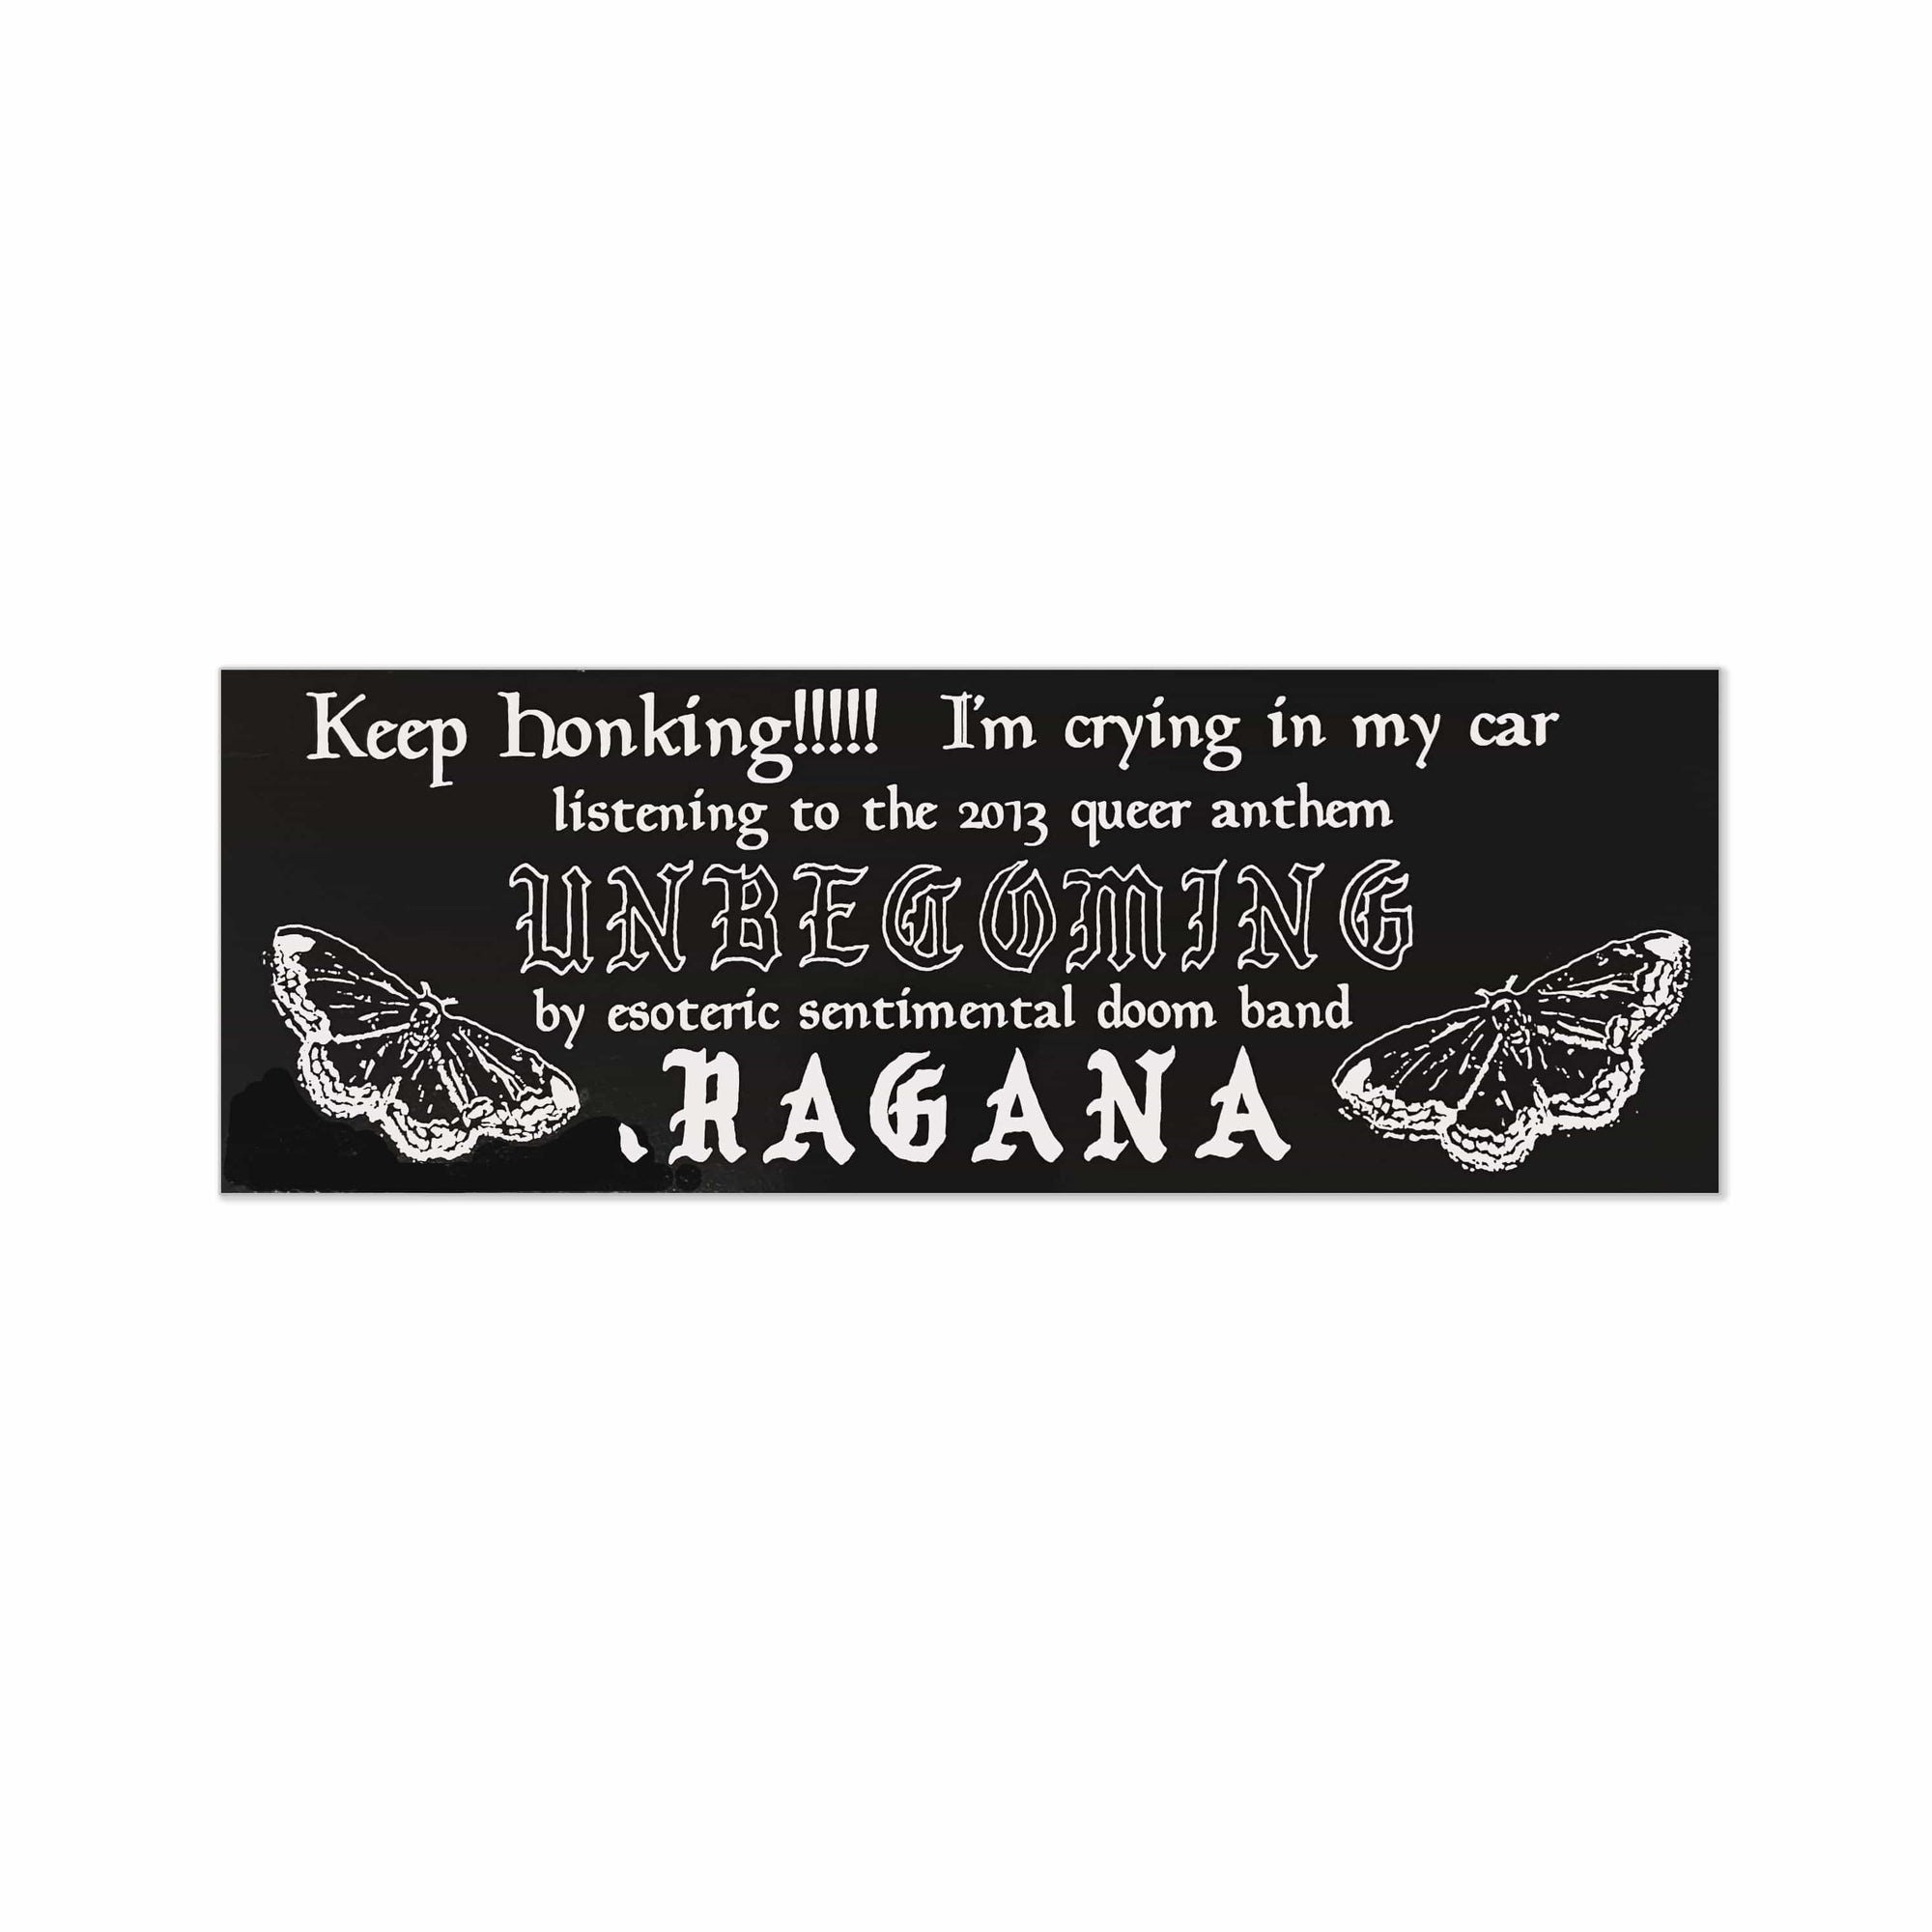 The Flenser Apparel Ragana "Keep Honking" Sticker